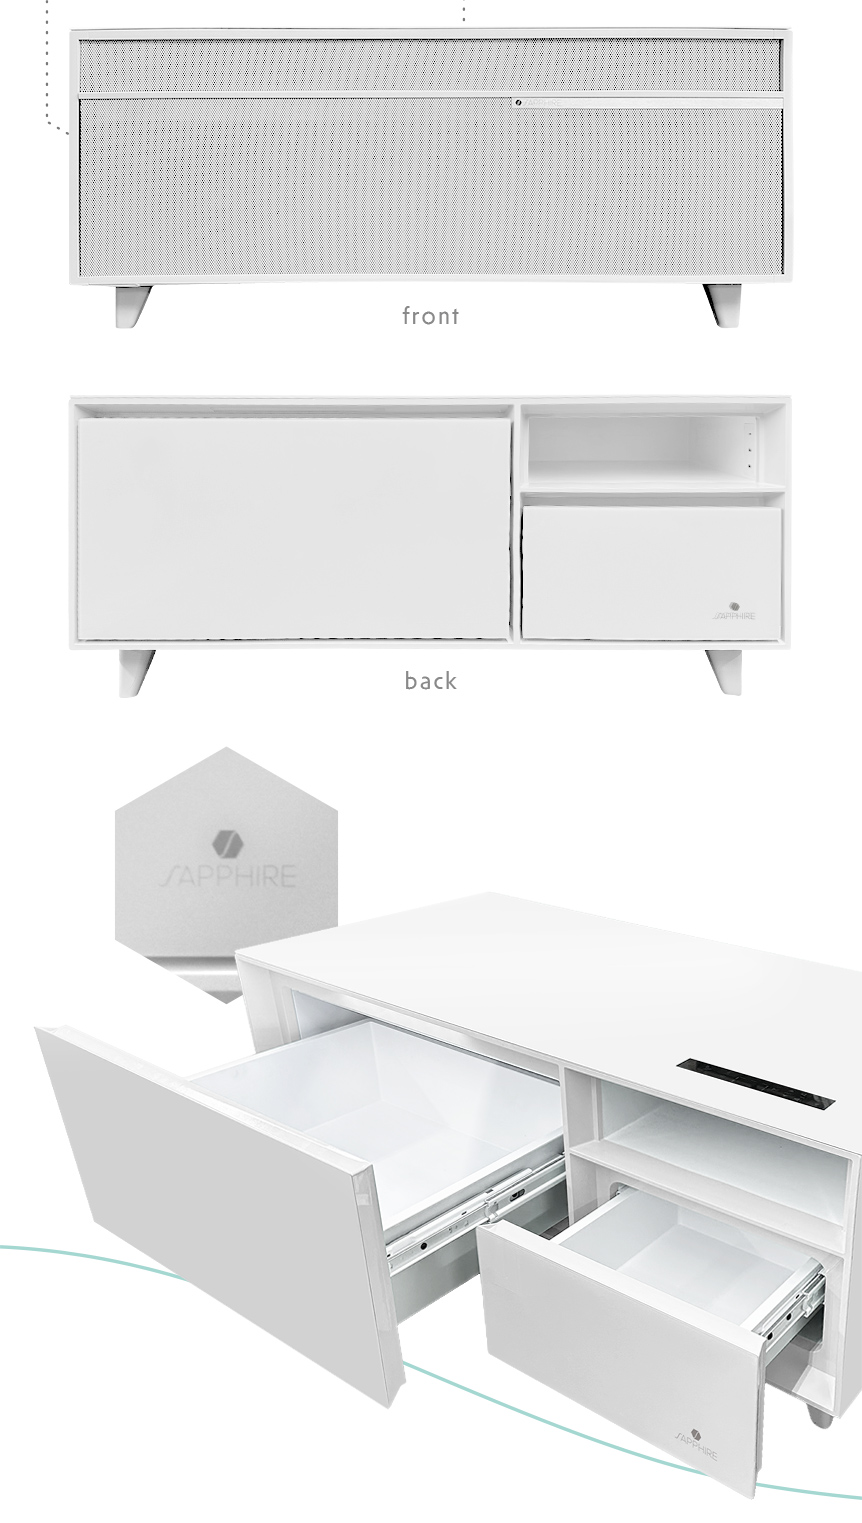 STB80 | SAPPHIRE / 冷蔵庫付テーブル 【サファイア公式サイト】